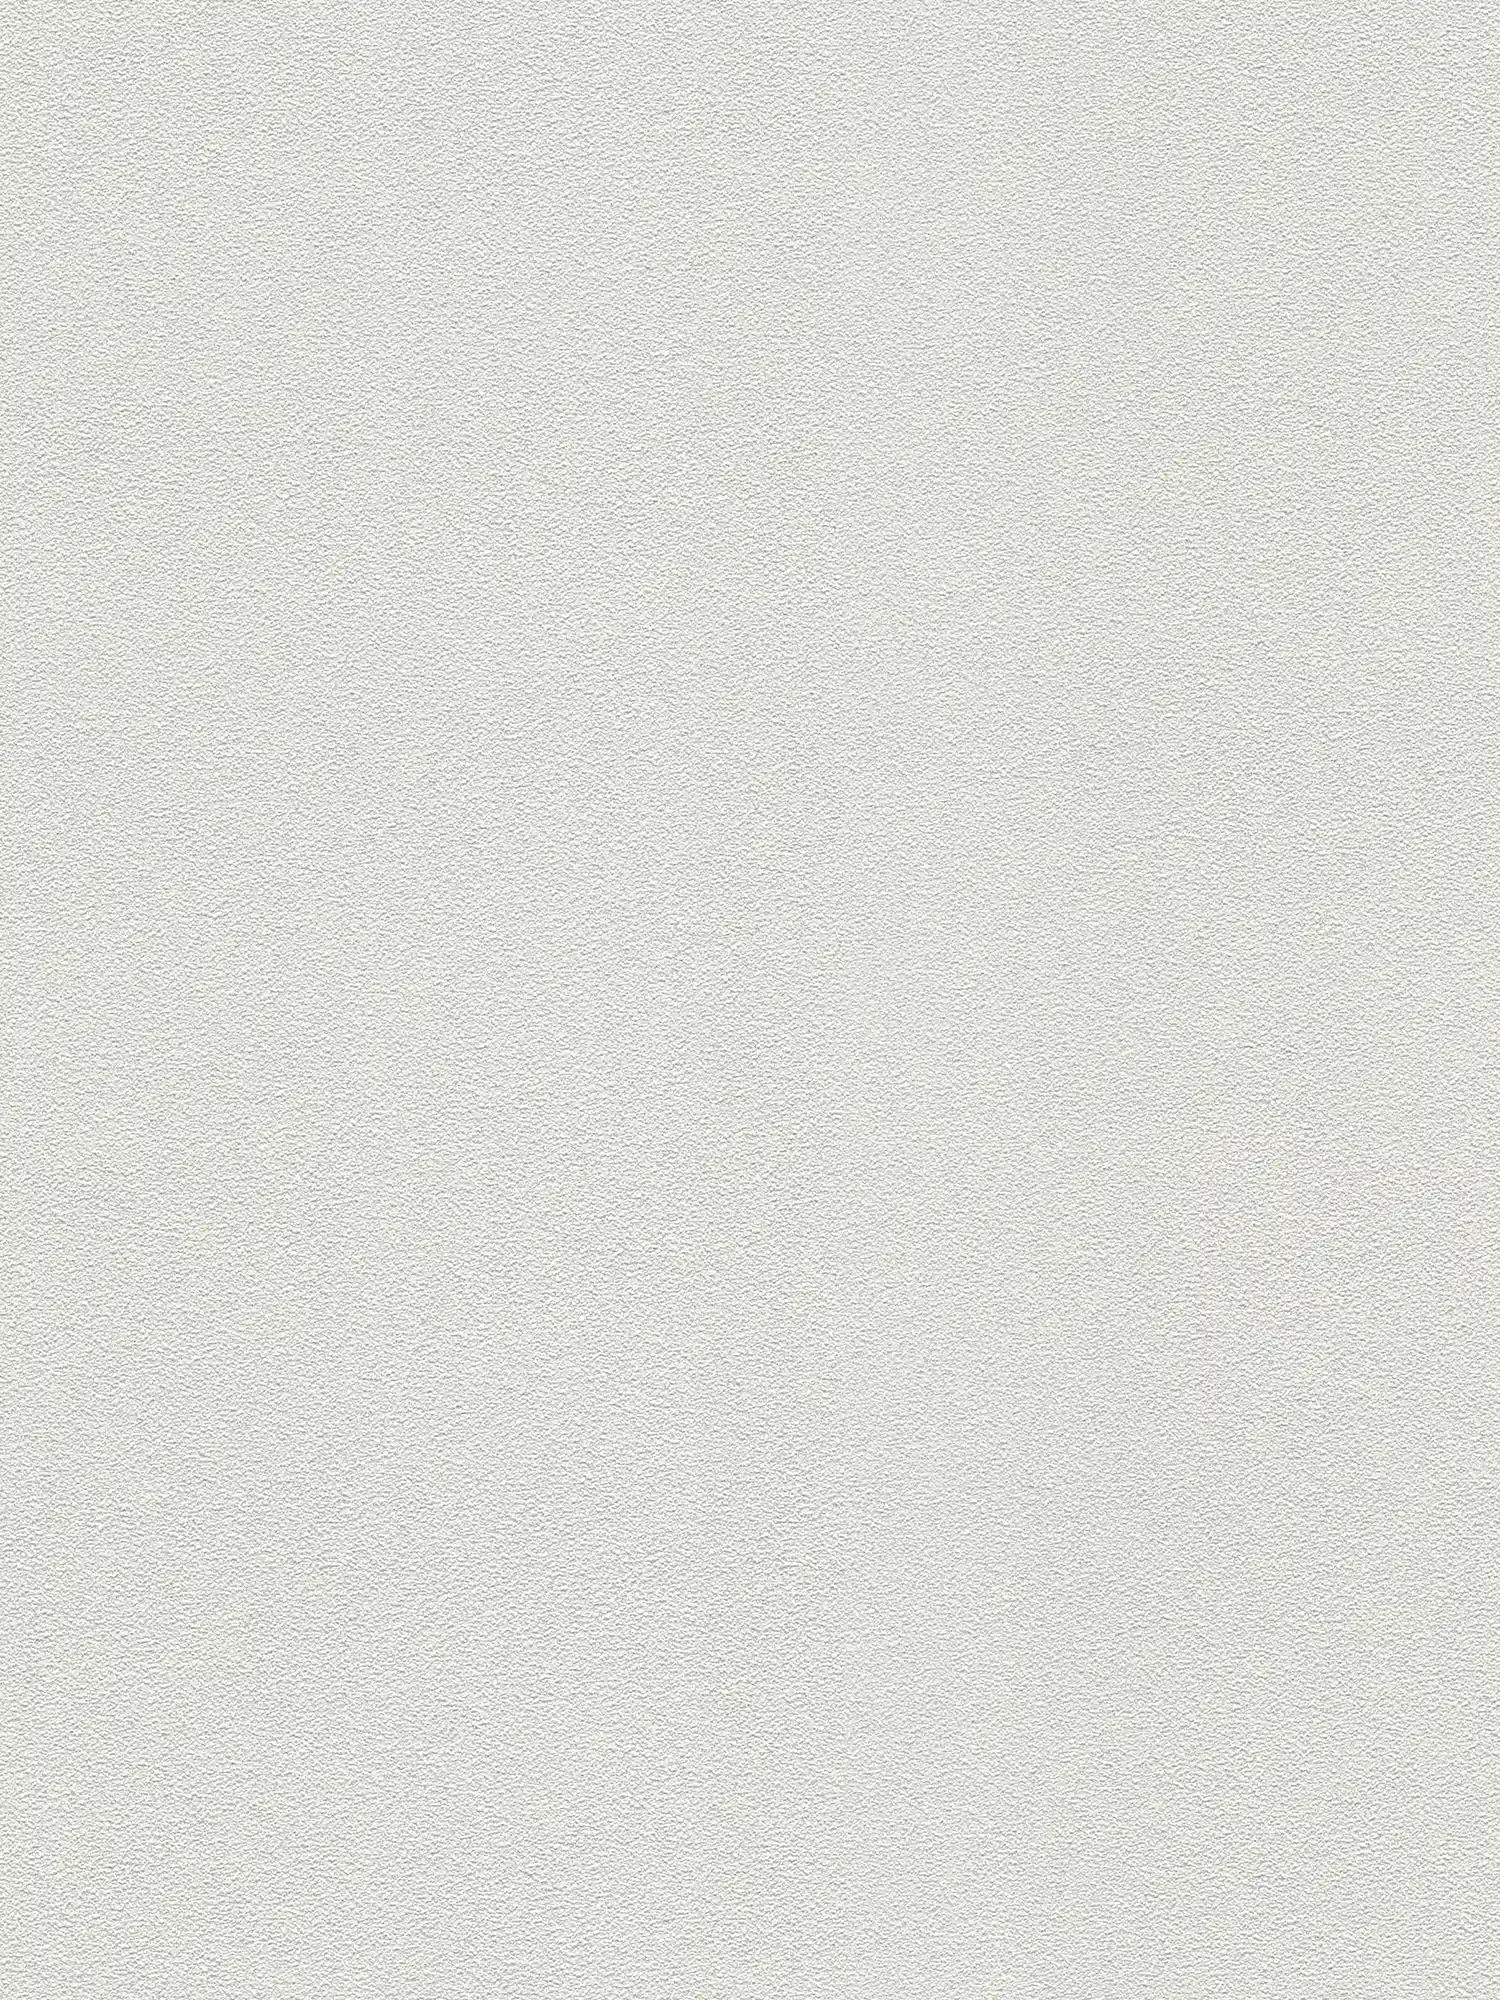 Papel pintado con estructura de fieltro plano - pintable, blanco
